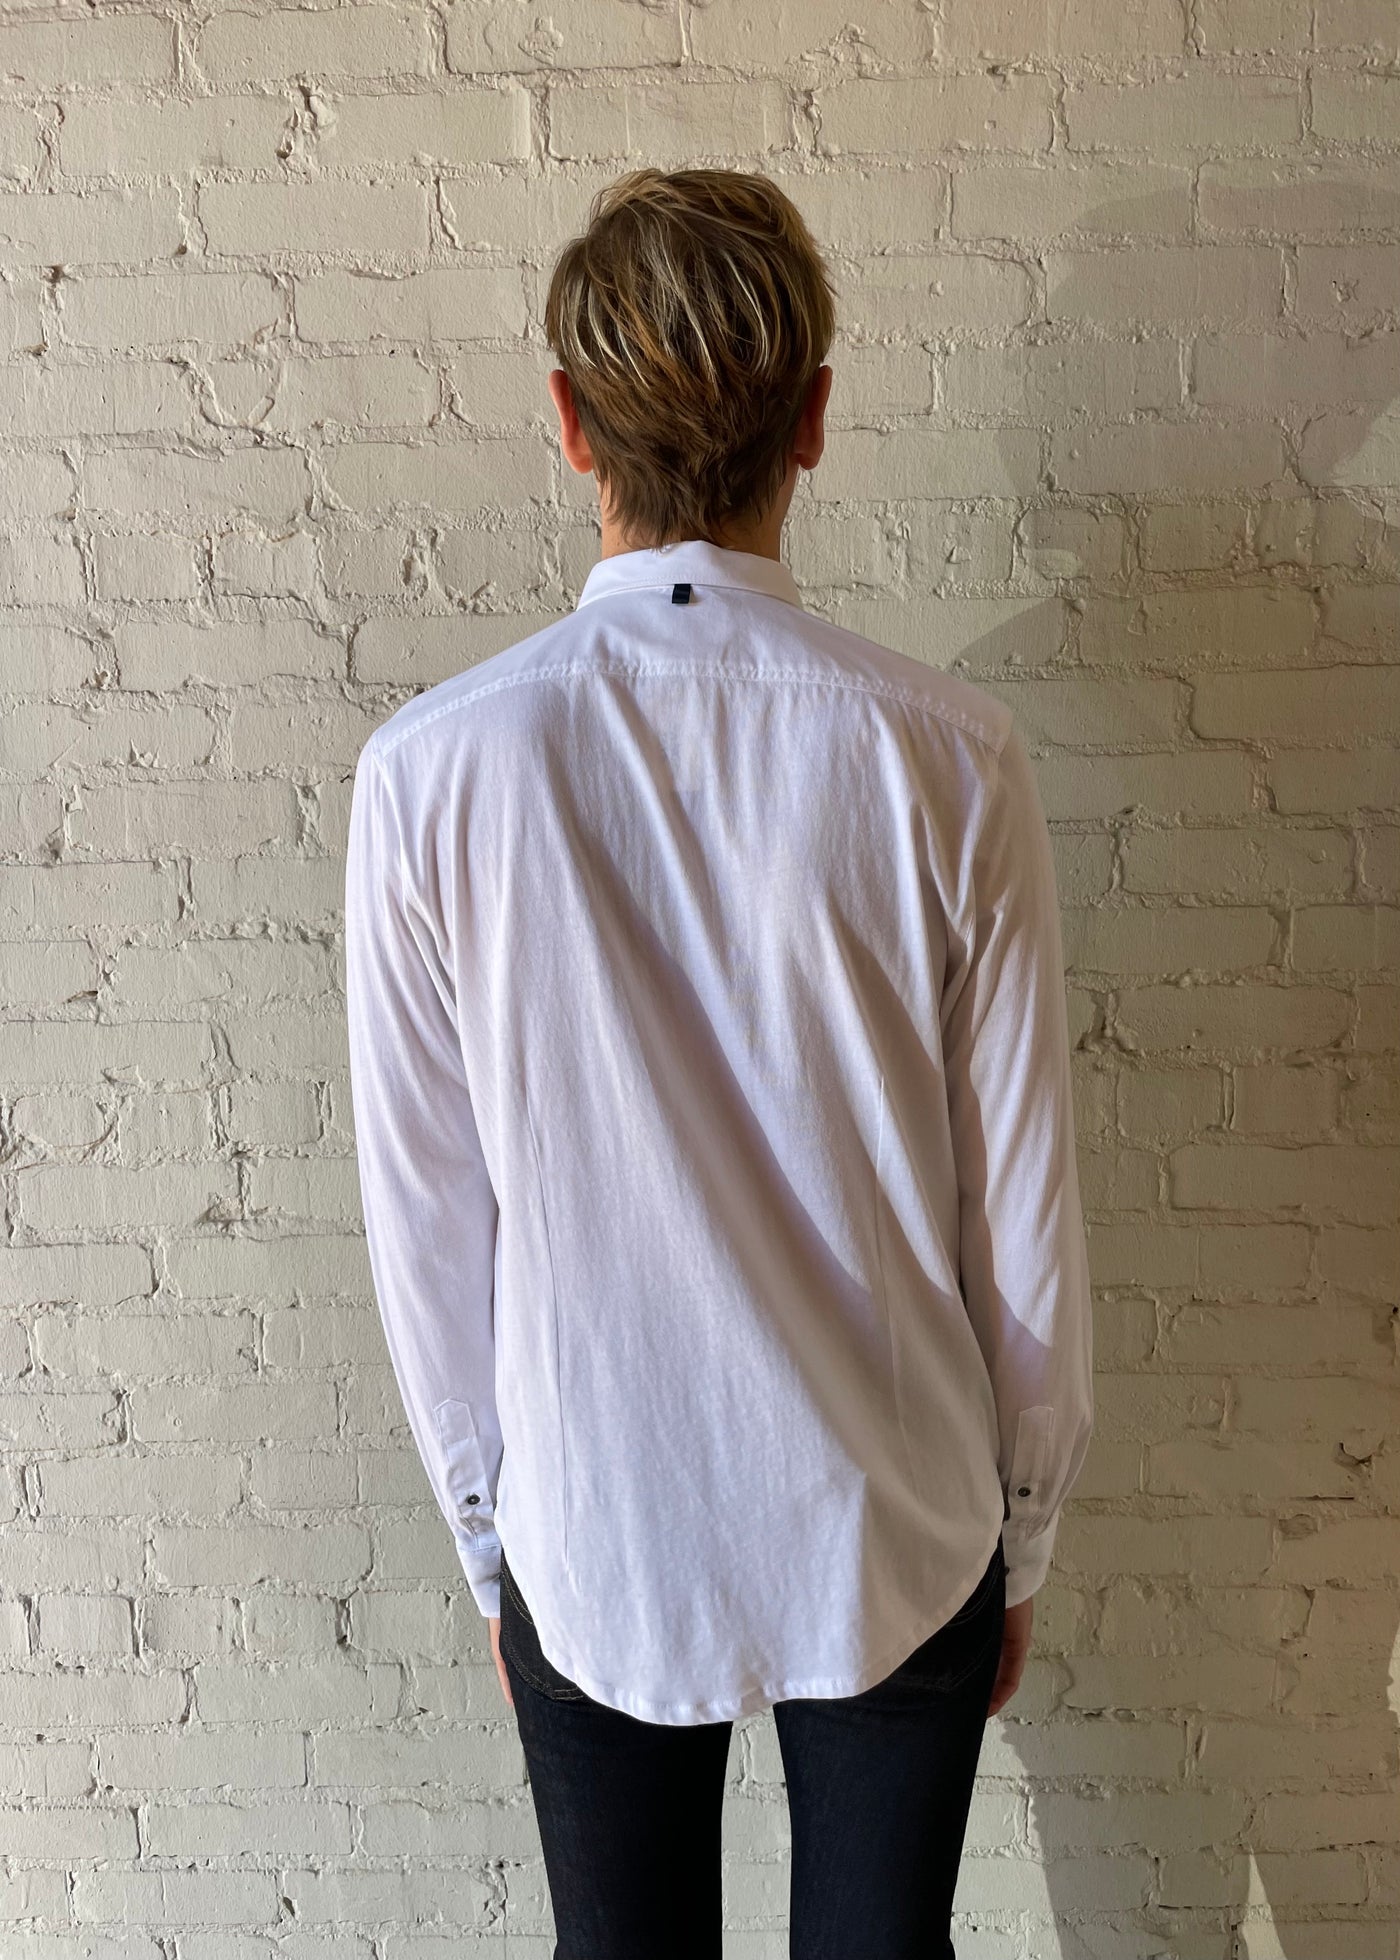 Male model wearing white button down shirt